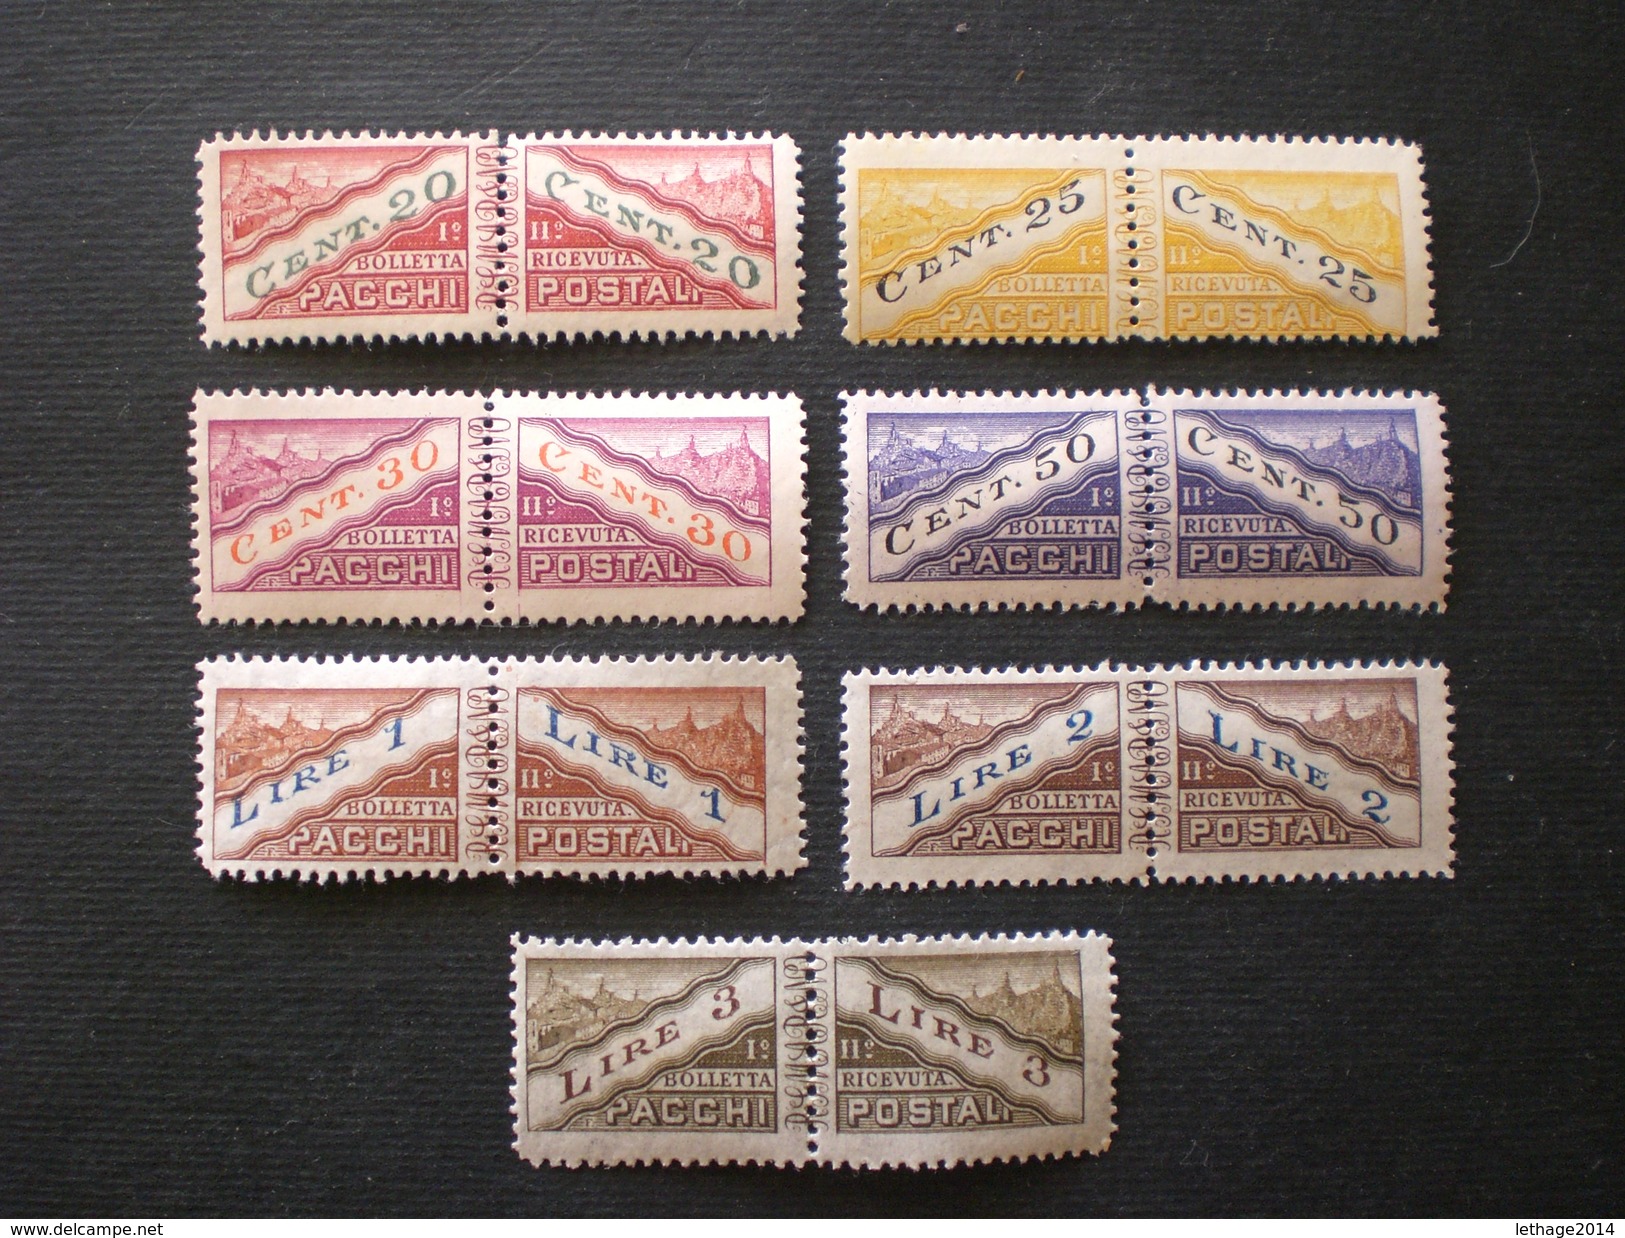 SAN MARINO 1945 PACCHI POSTALI  MLH - Parcel Post Stamps